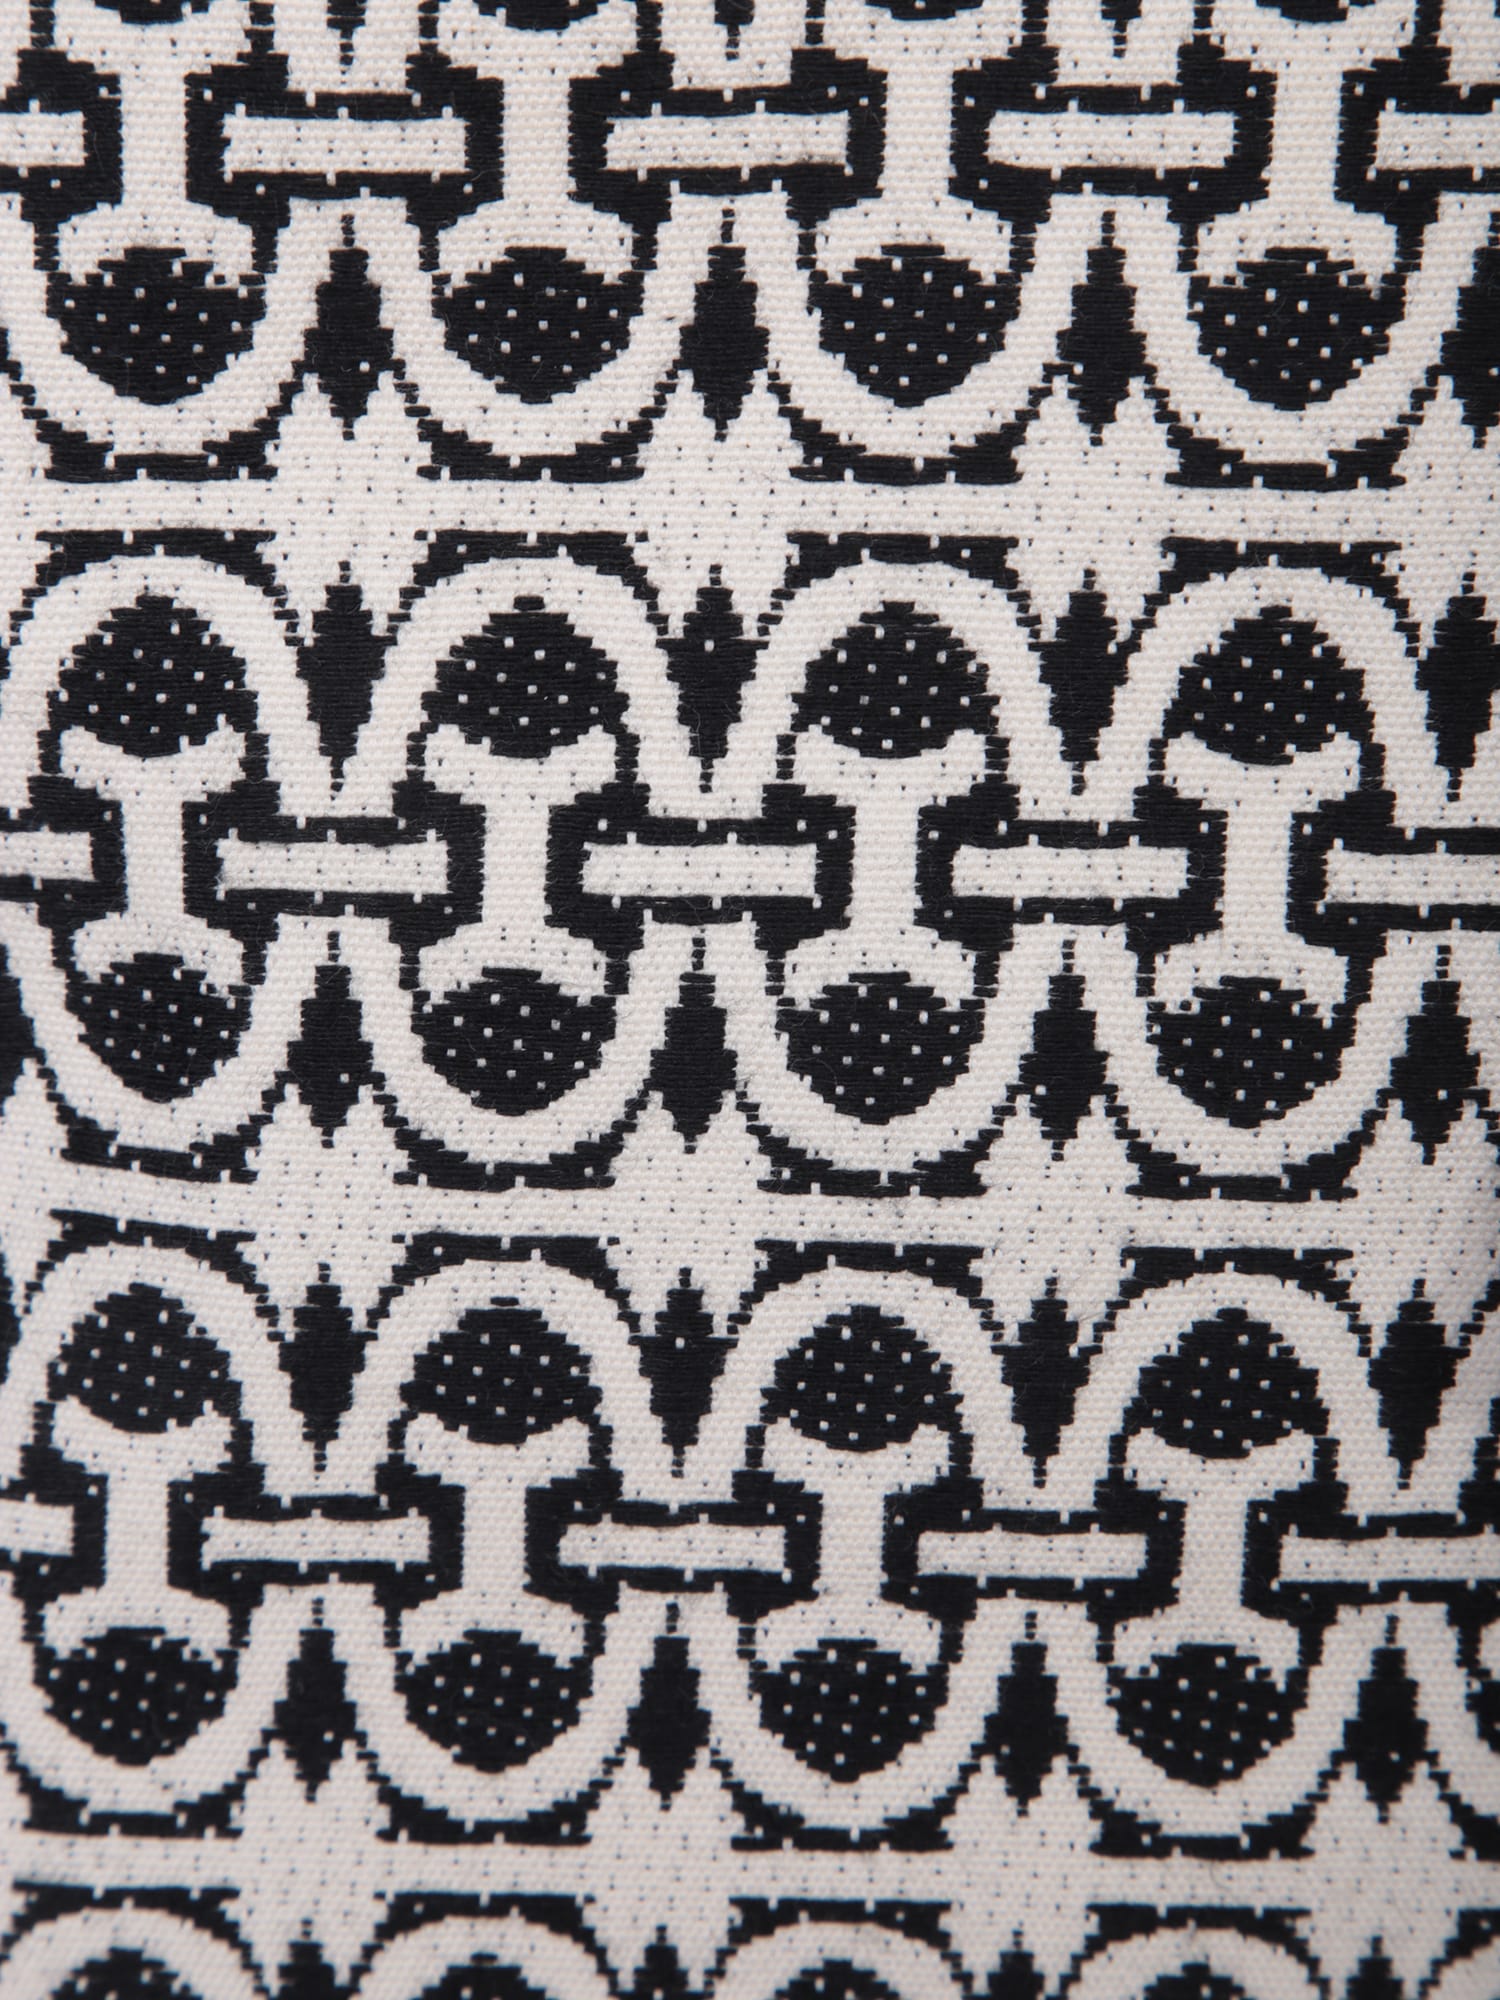 Shop Coccinelle Mini Jacquard Fabric Black And White Tote Bag